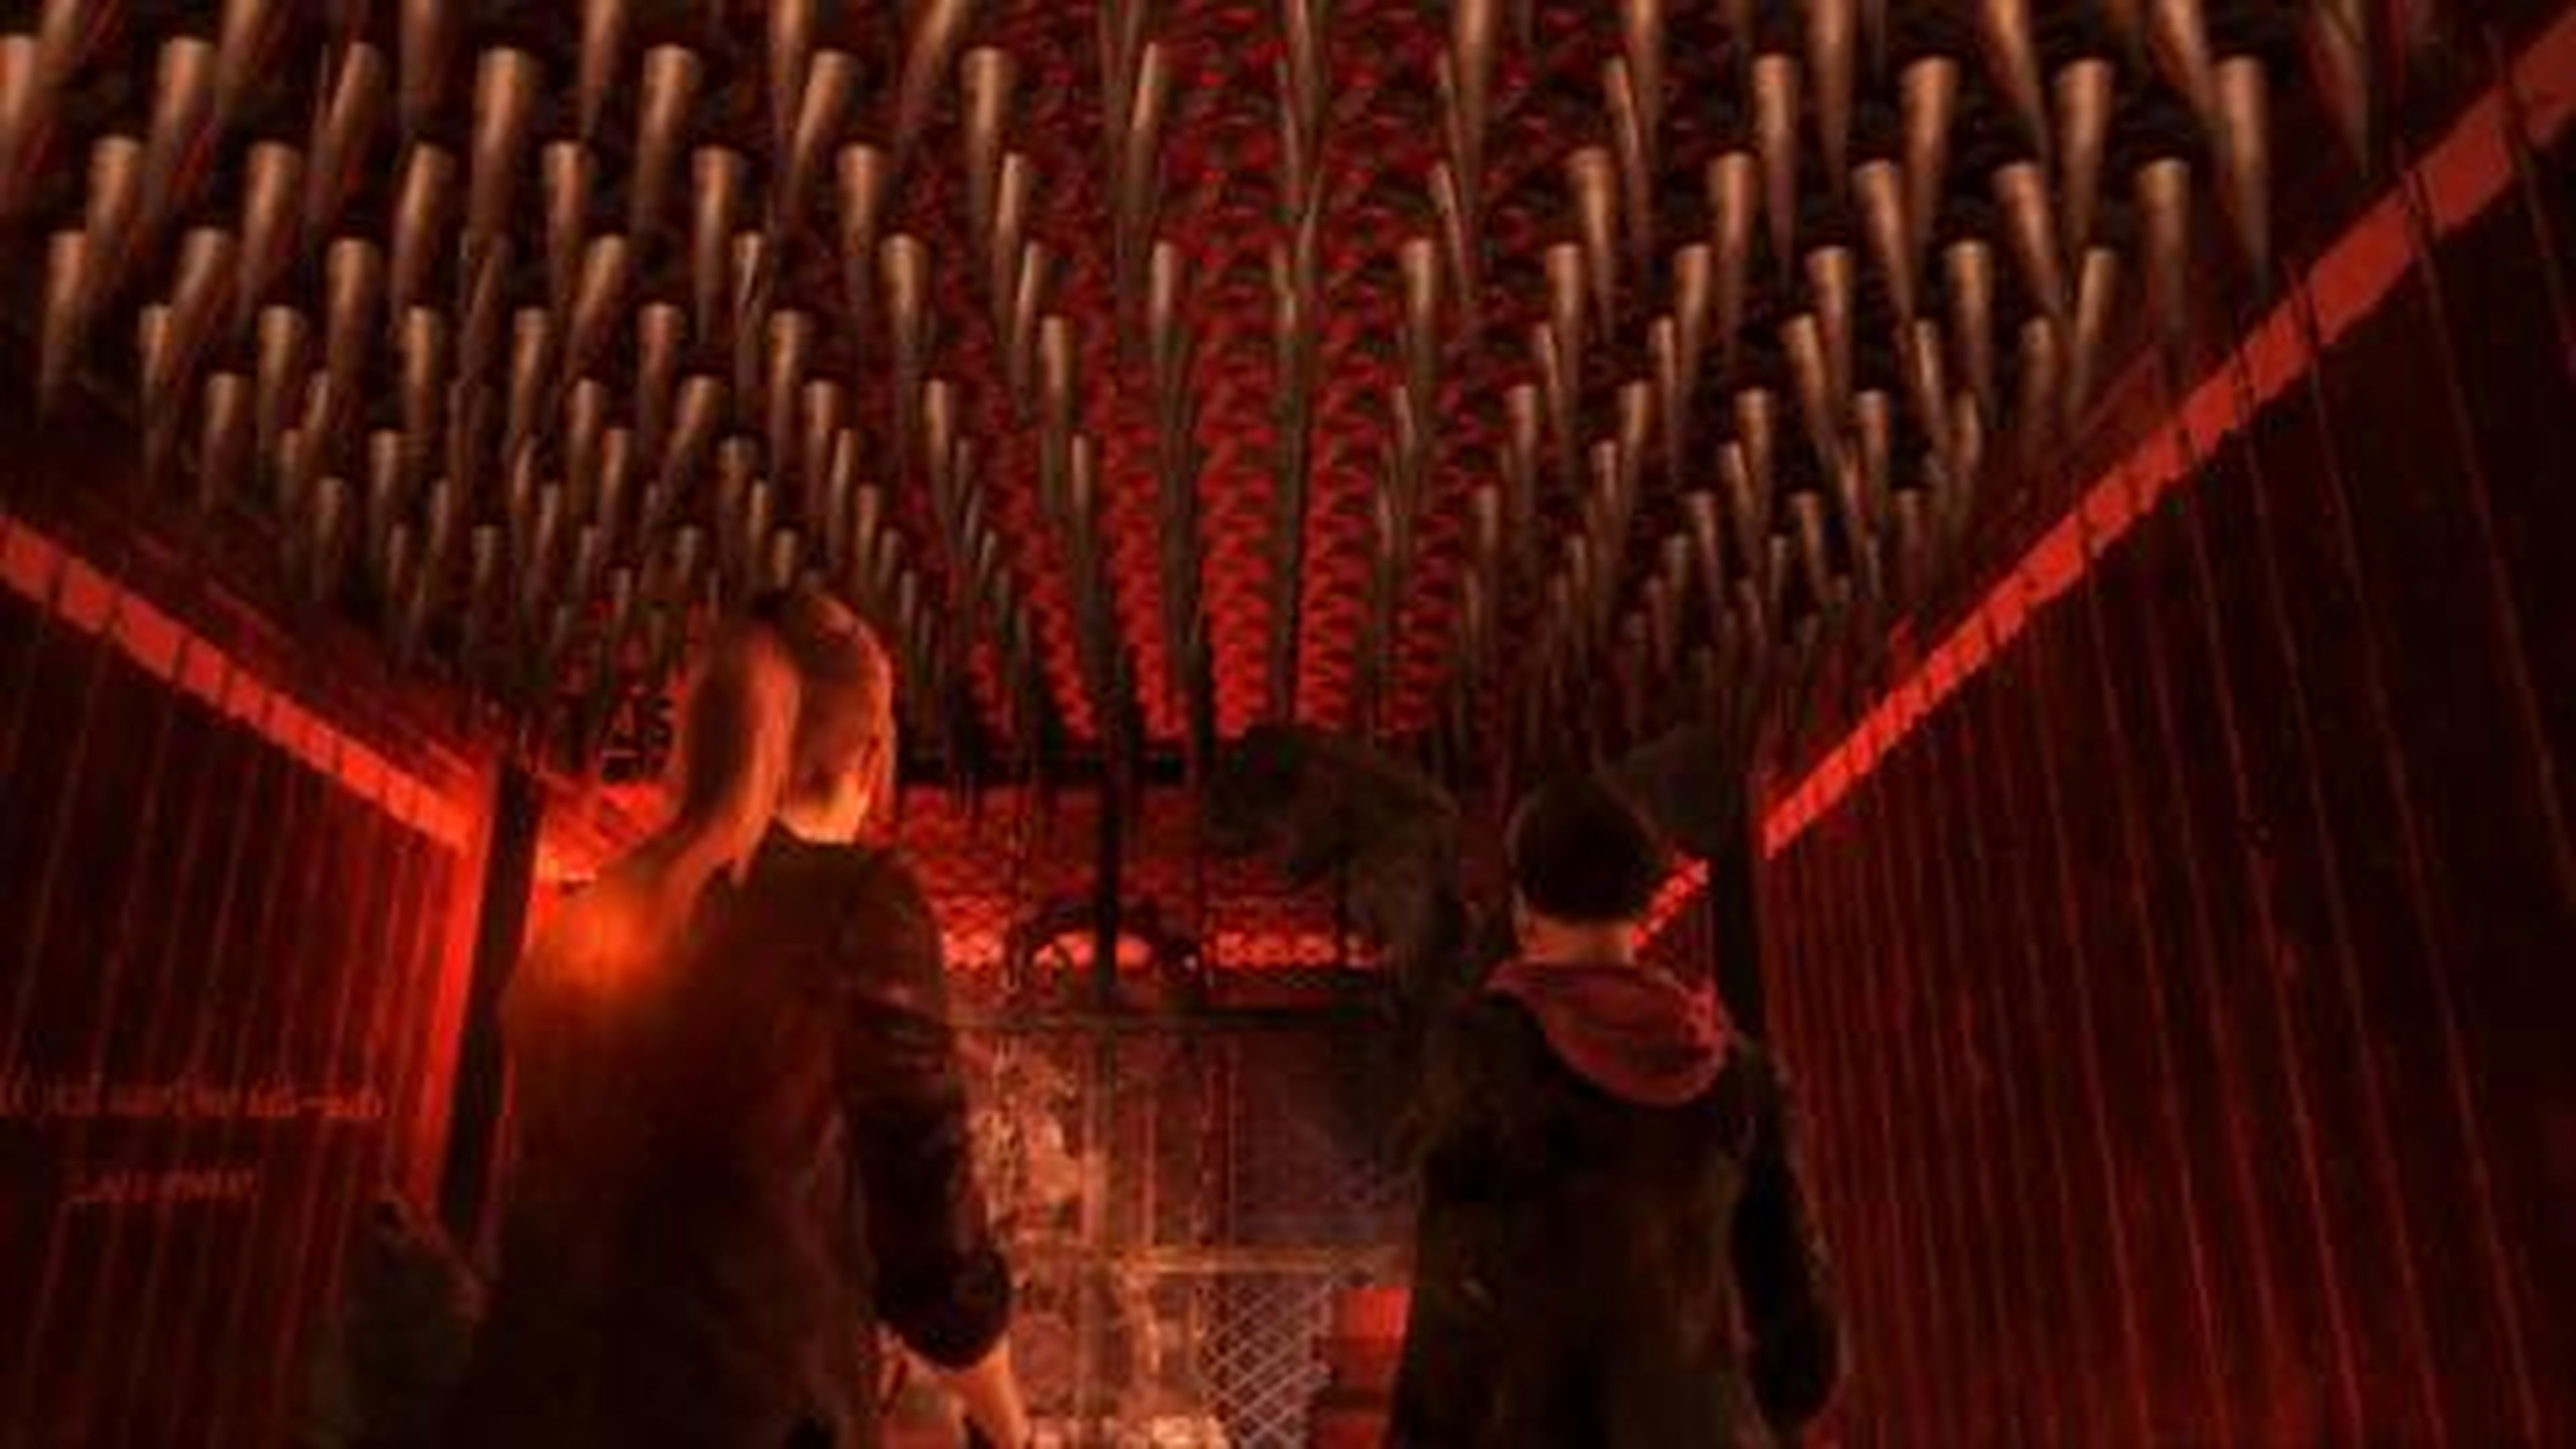 Resident Evil Revelations 2 - Episode 3 Trailer (PS4_Xbox One)